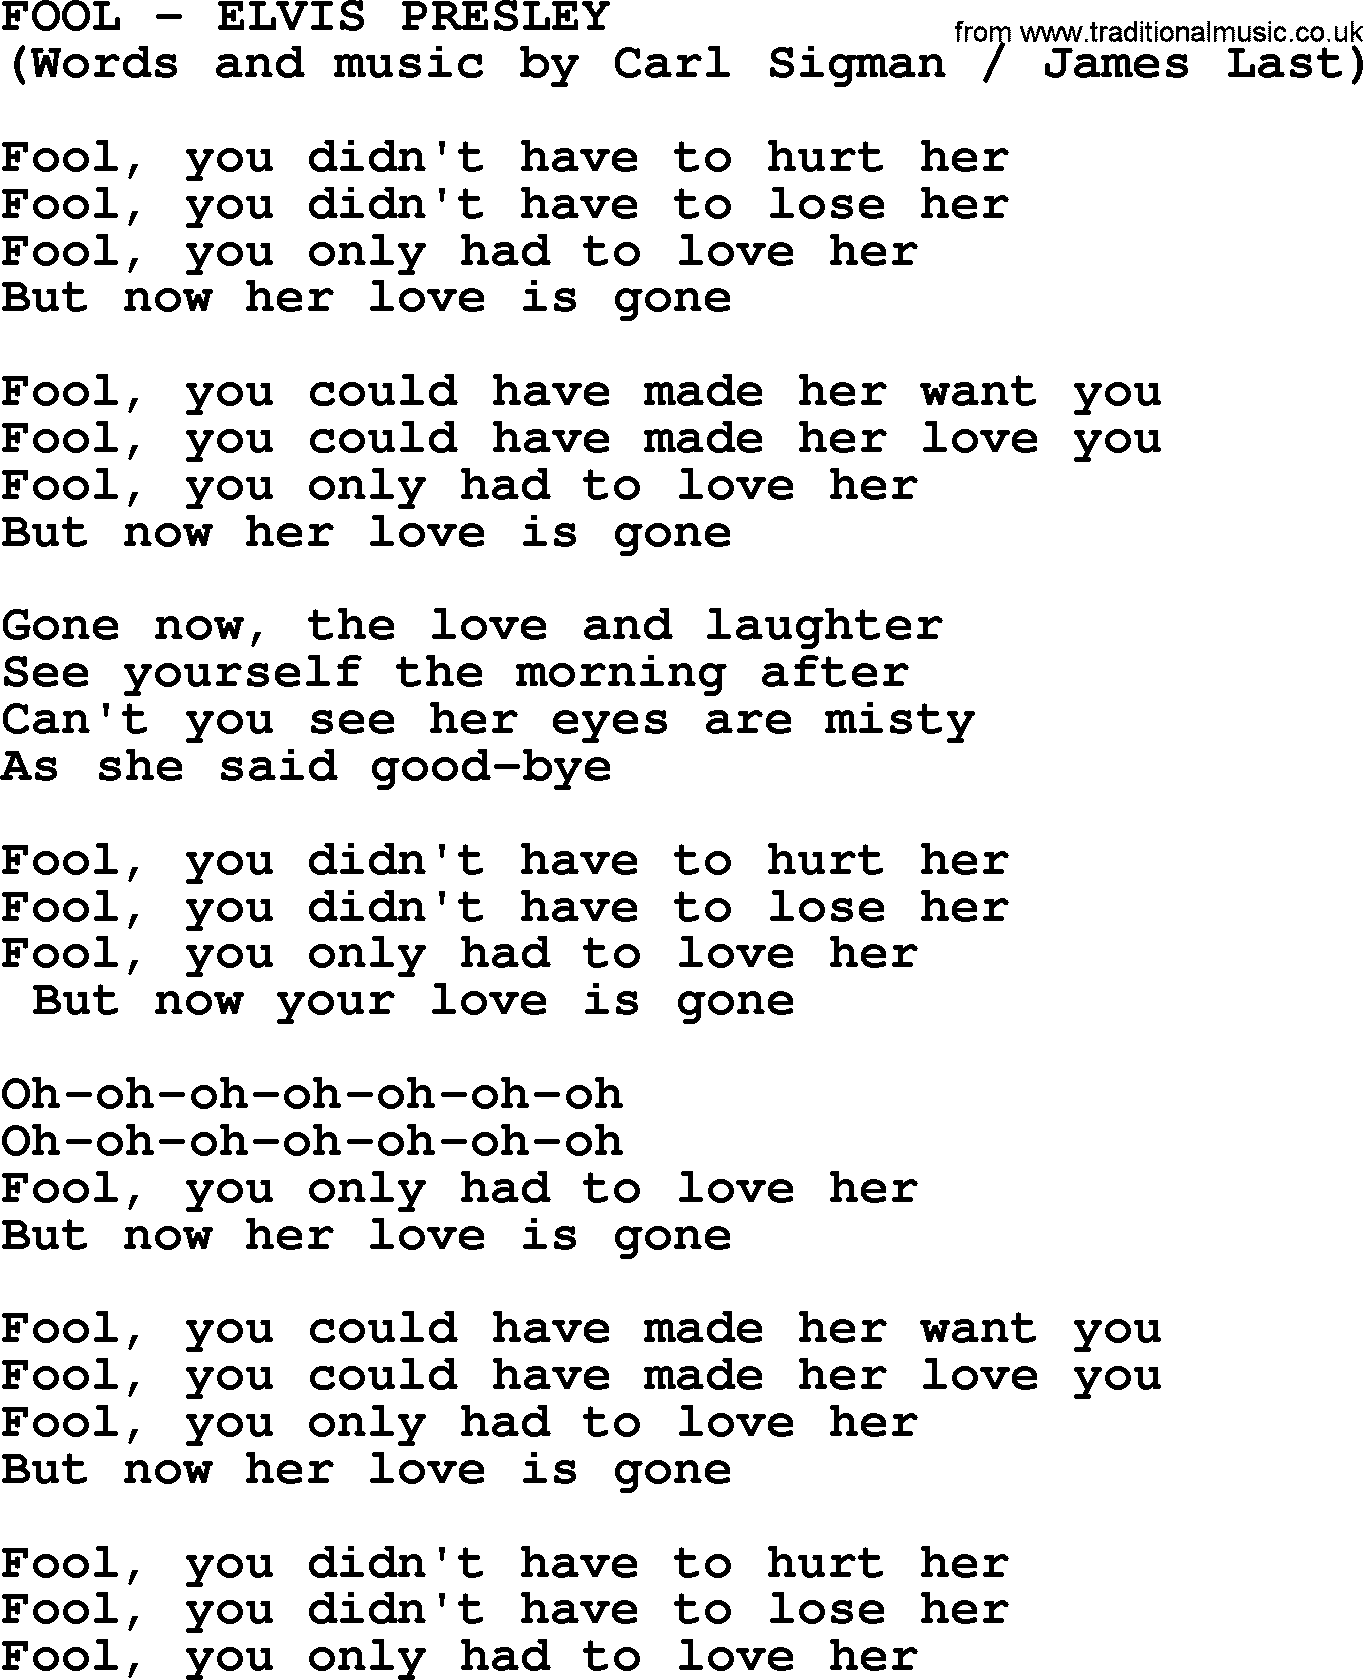 Elvis Presley song: Fool lyrics